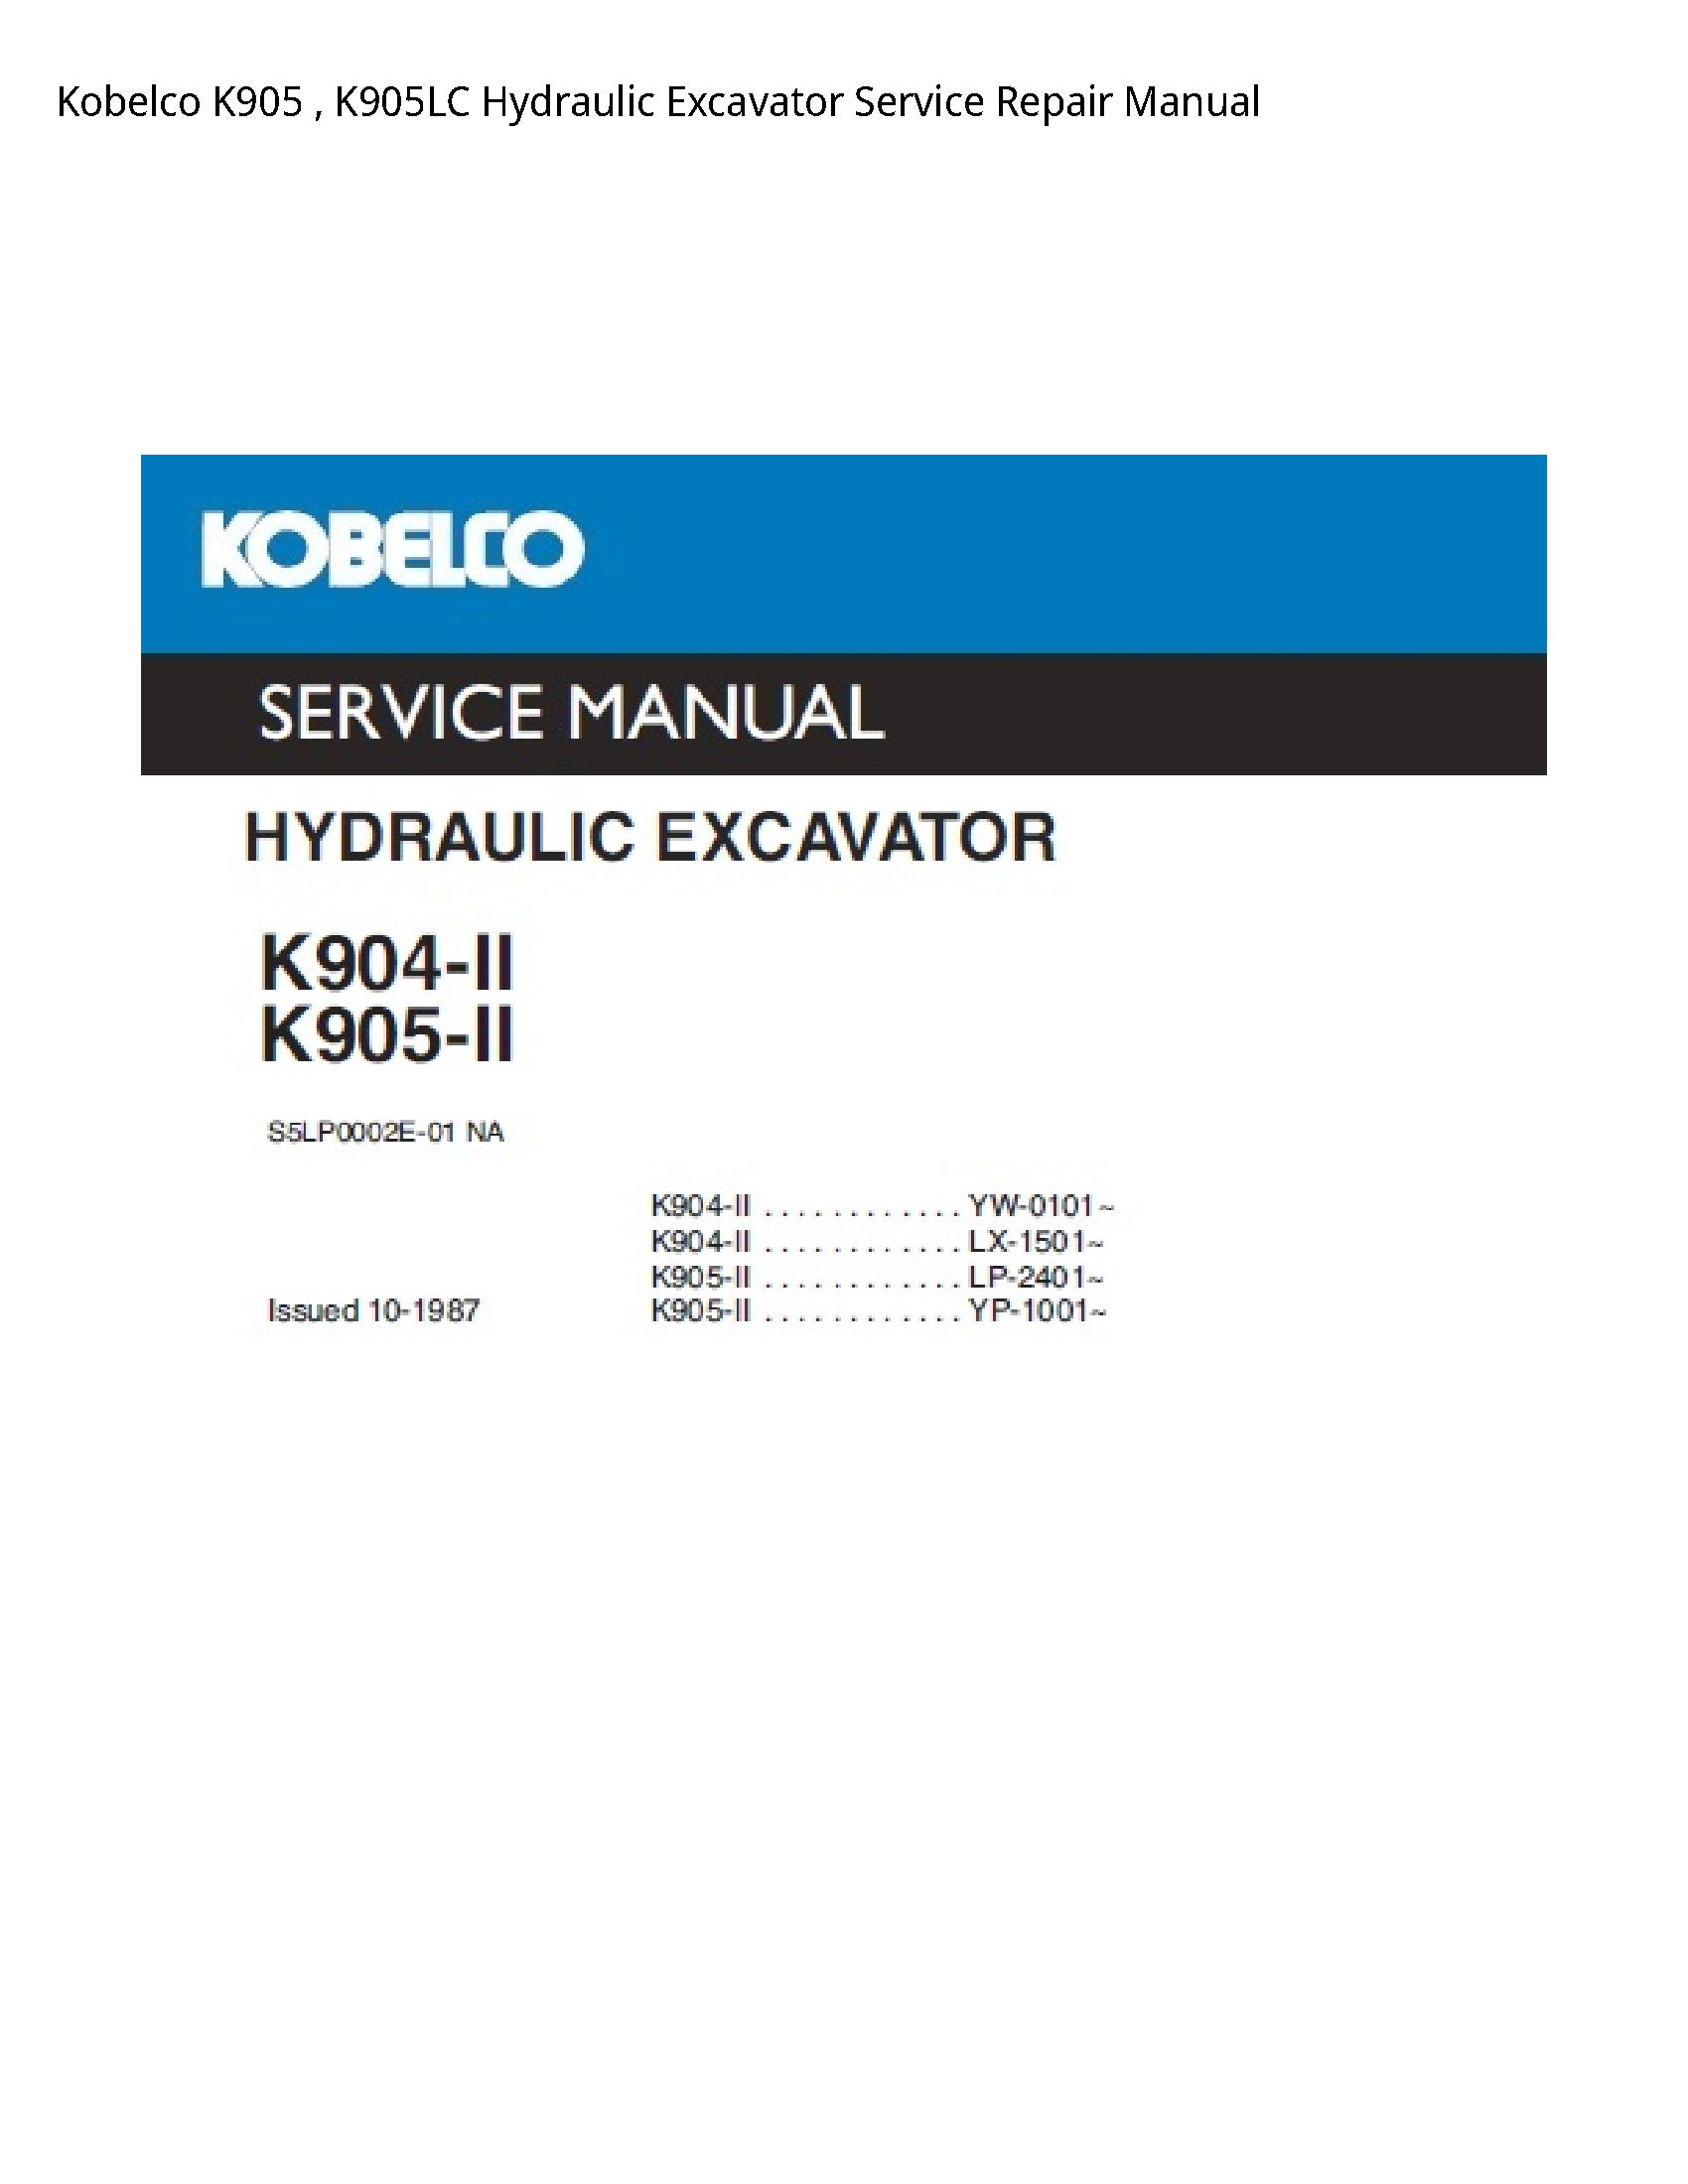 Kobelco K905 Hydraulic Excavator manual